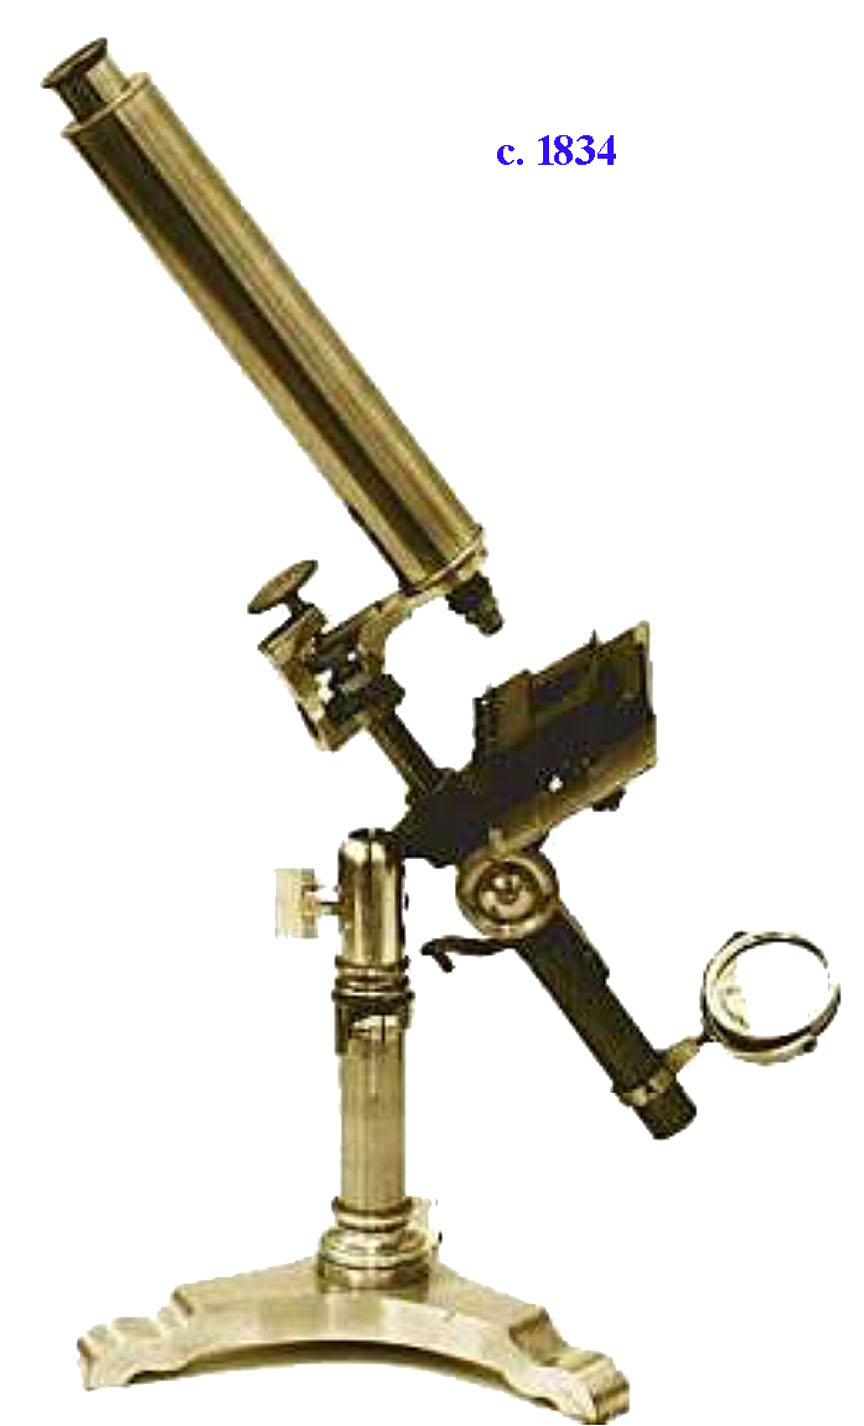 Ross microscope